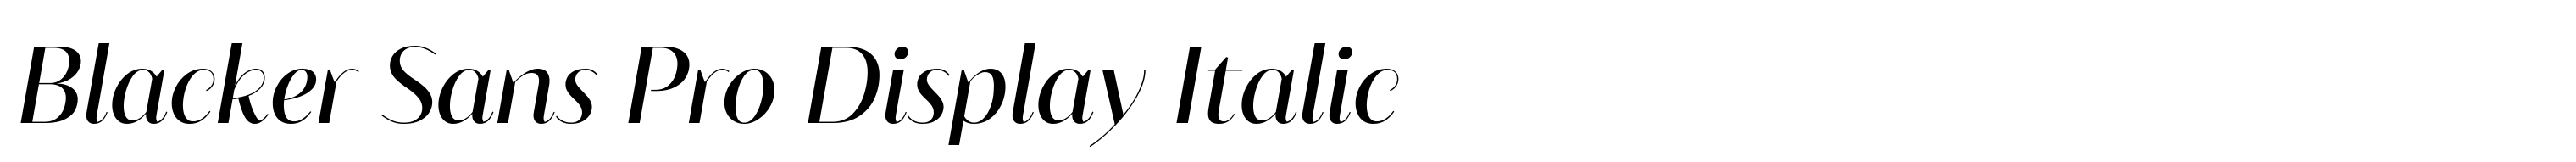 Blacker Sans Pro Display Italic